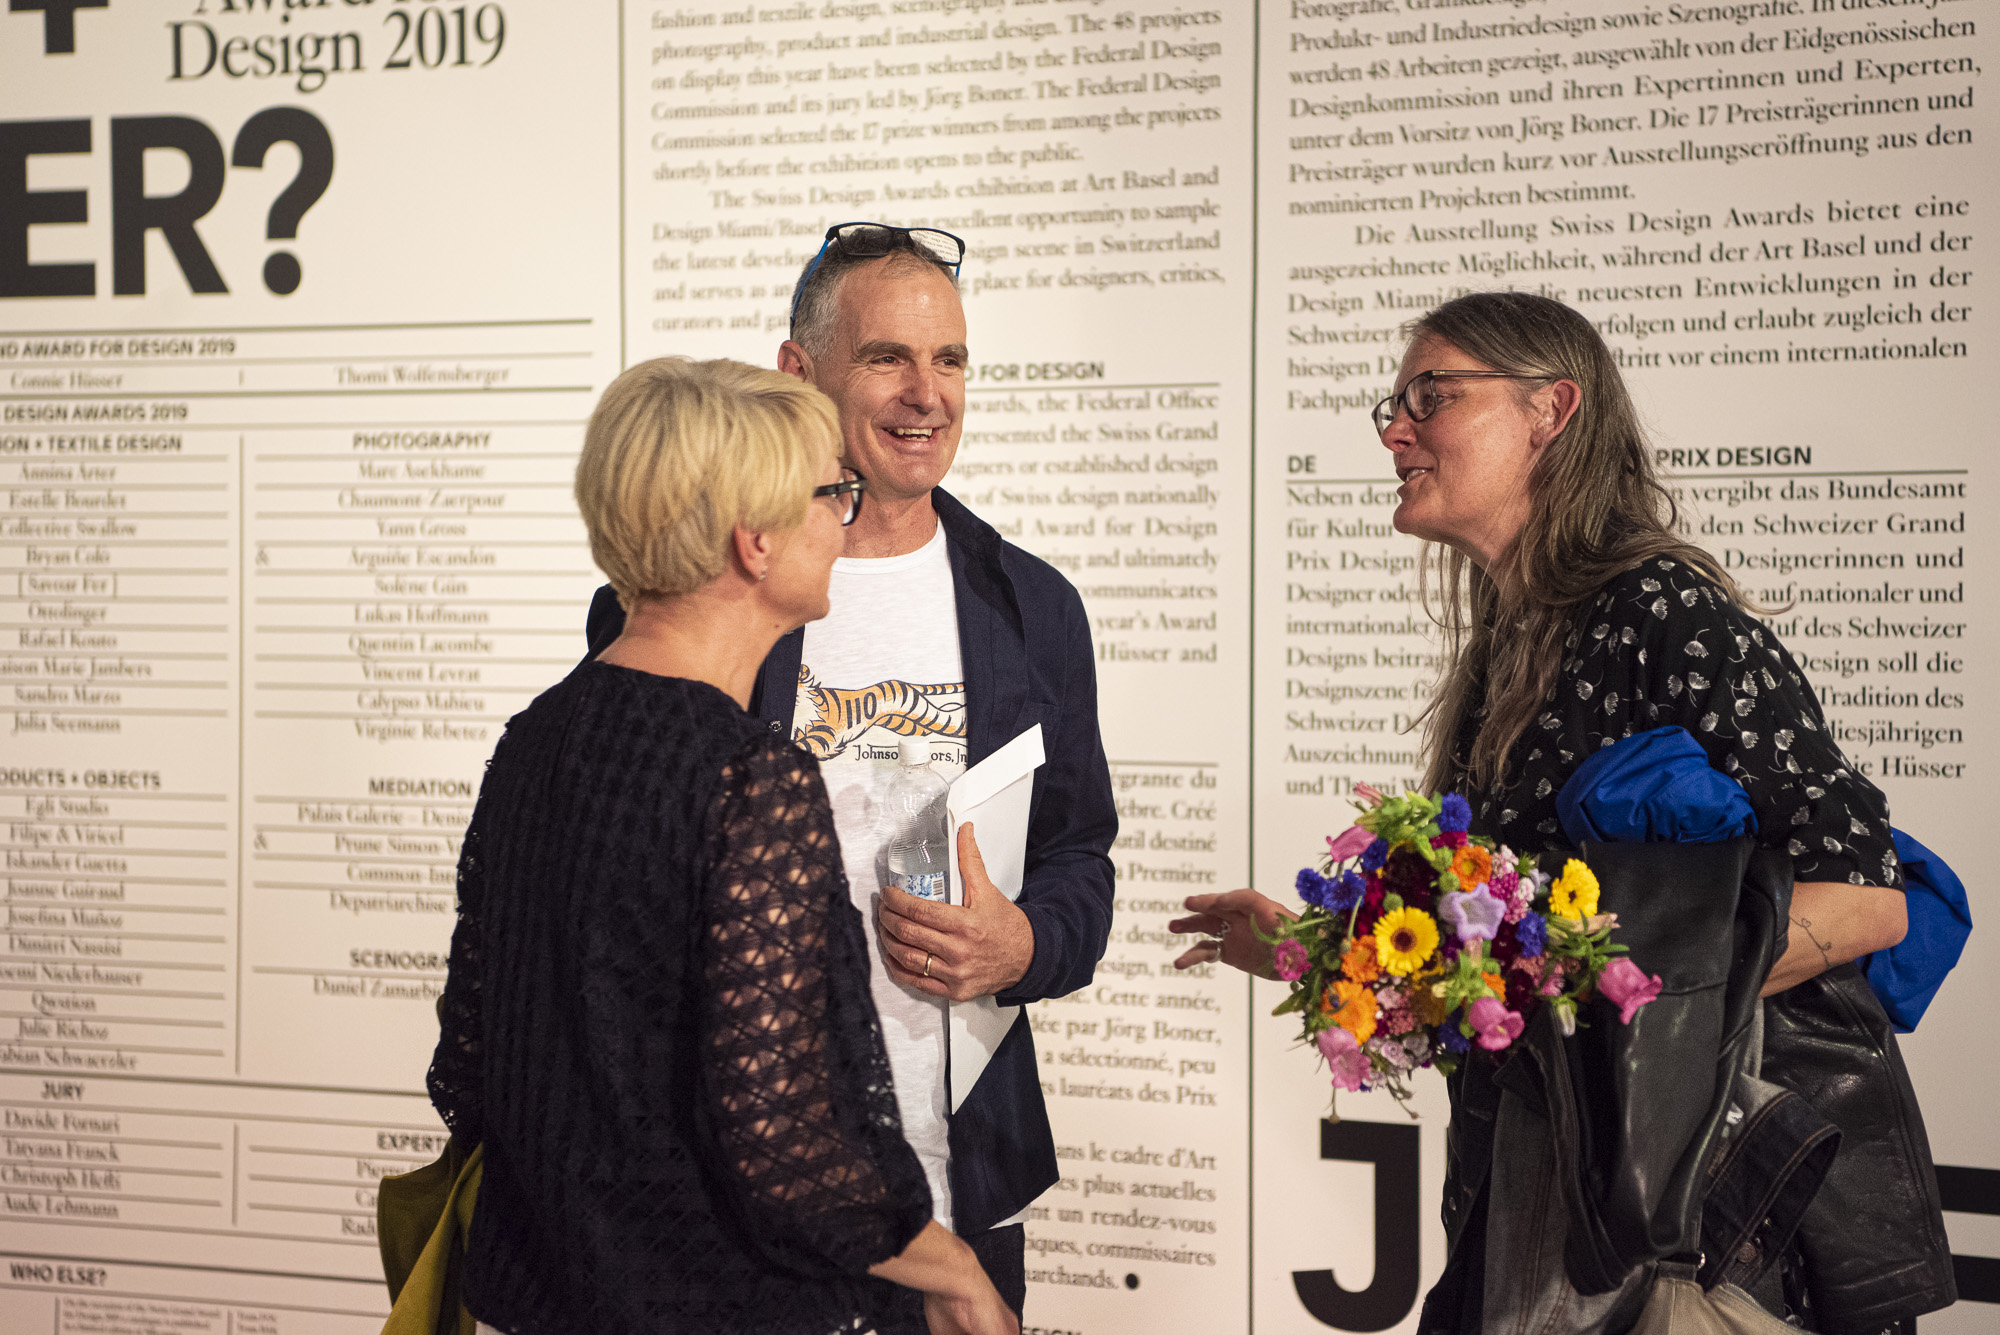 Grand Prix Design 2019 winner Thomi Wolfensberger and his wife Karoline (right)